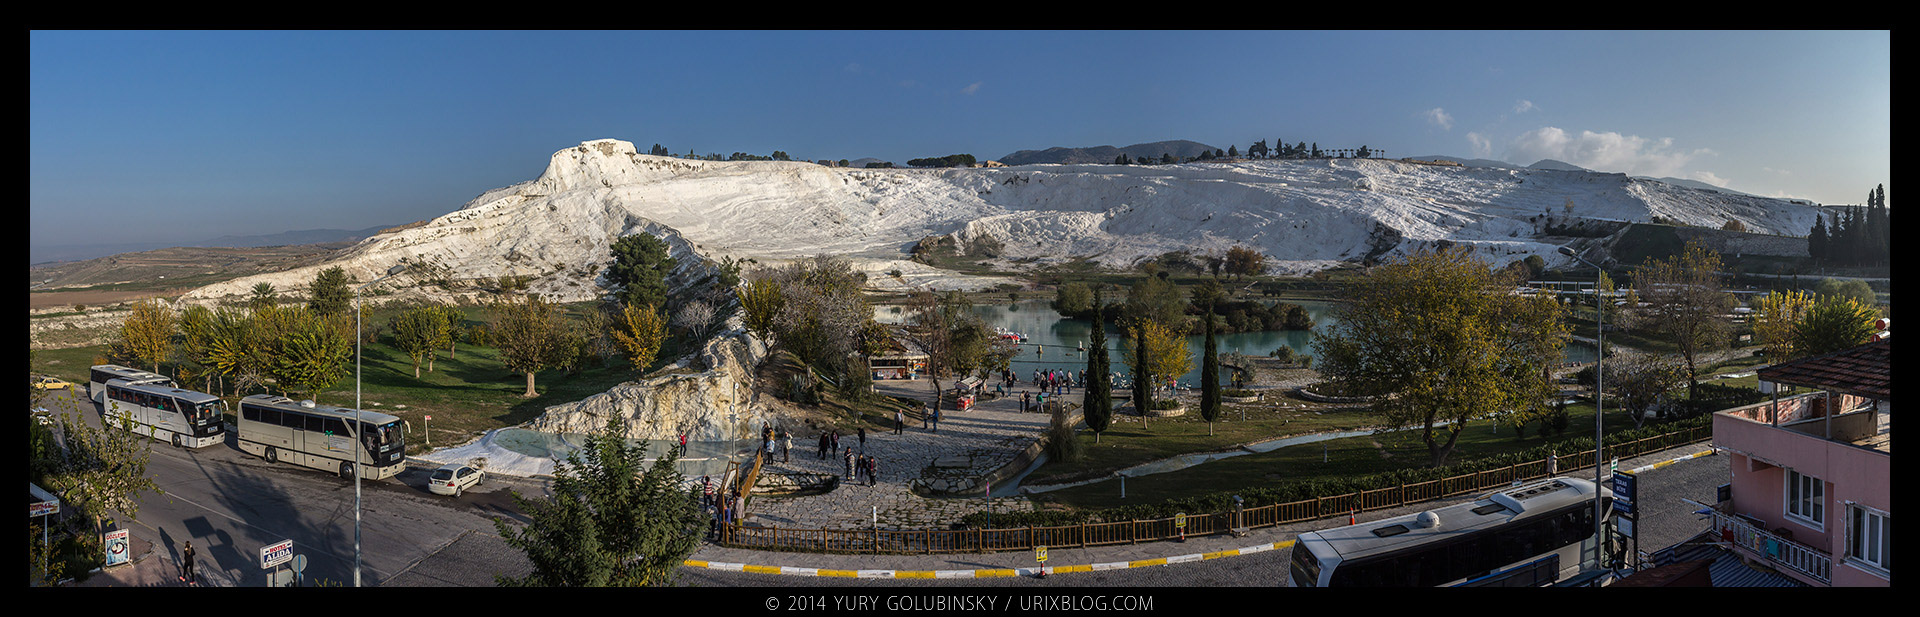 2014, Pamukkale, Travertine, Denizli, Turkey, panorama, nature, white, cotton castle